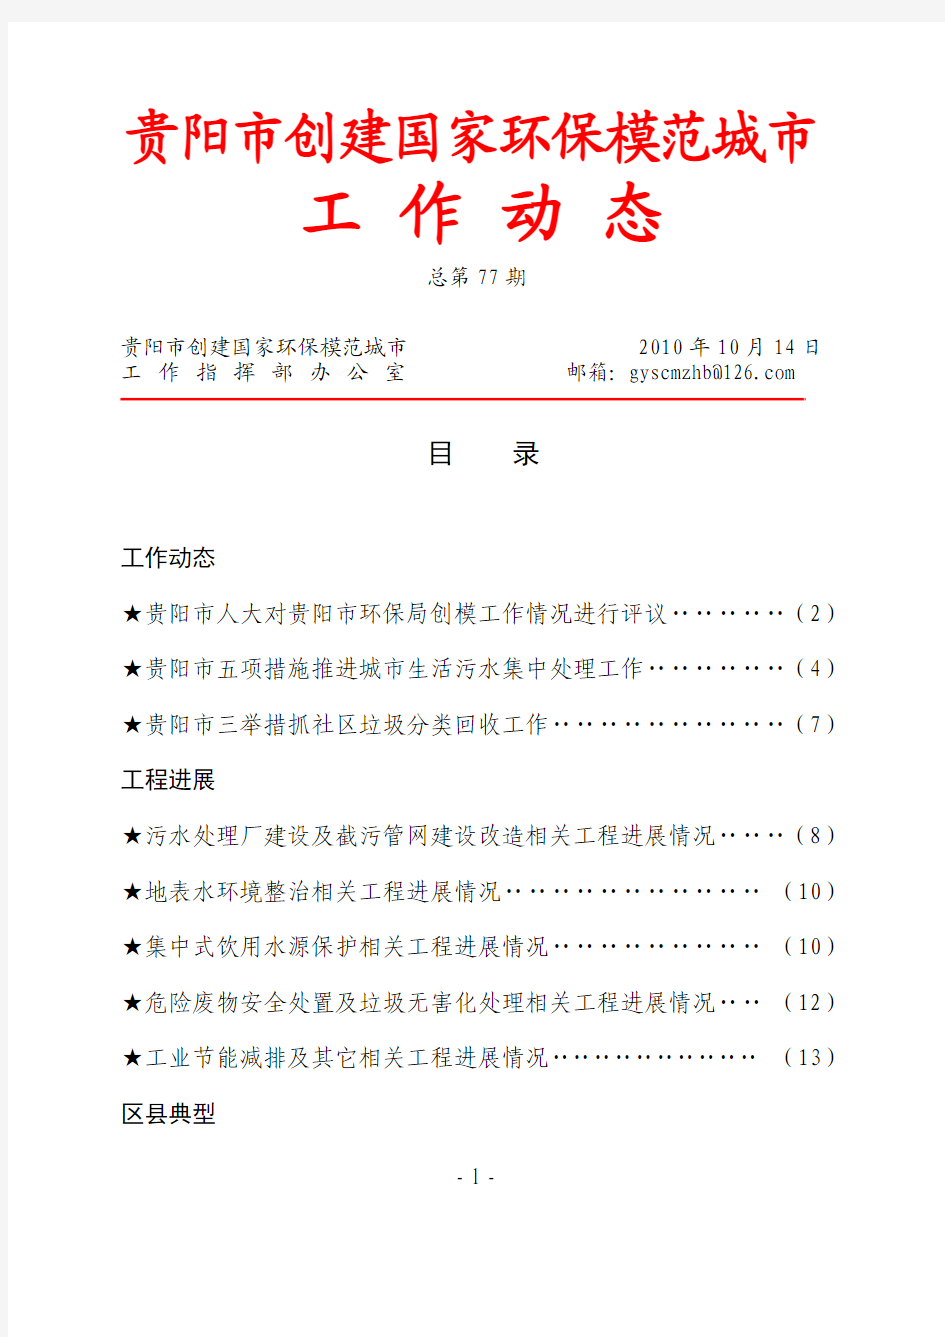 the 贵阳市创模工作简报第77期2010年第7 期guide download